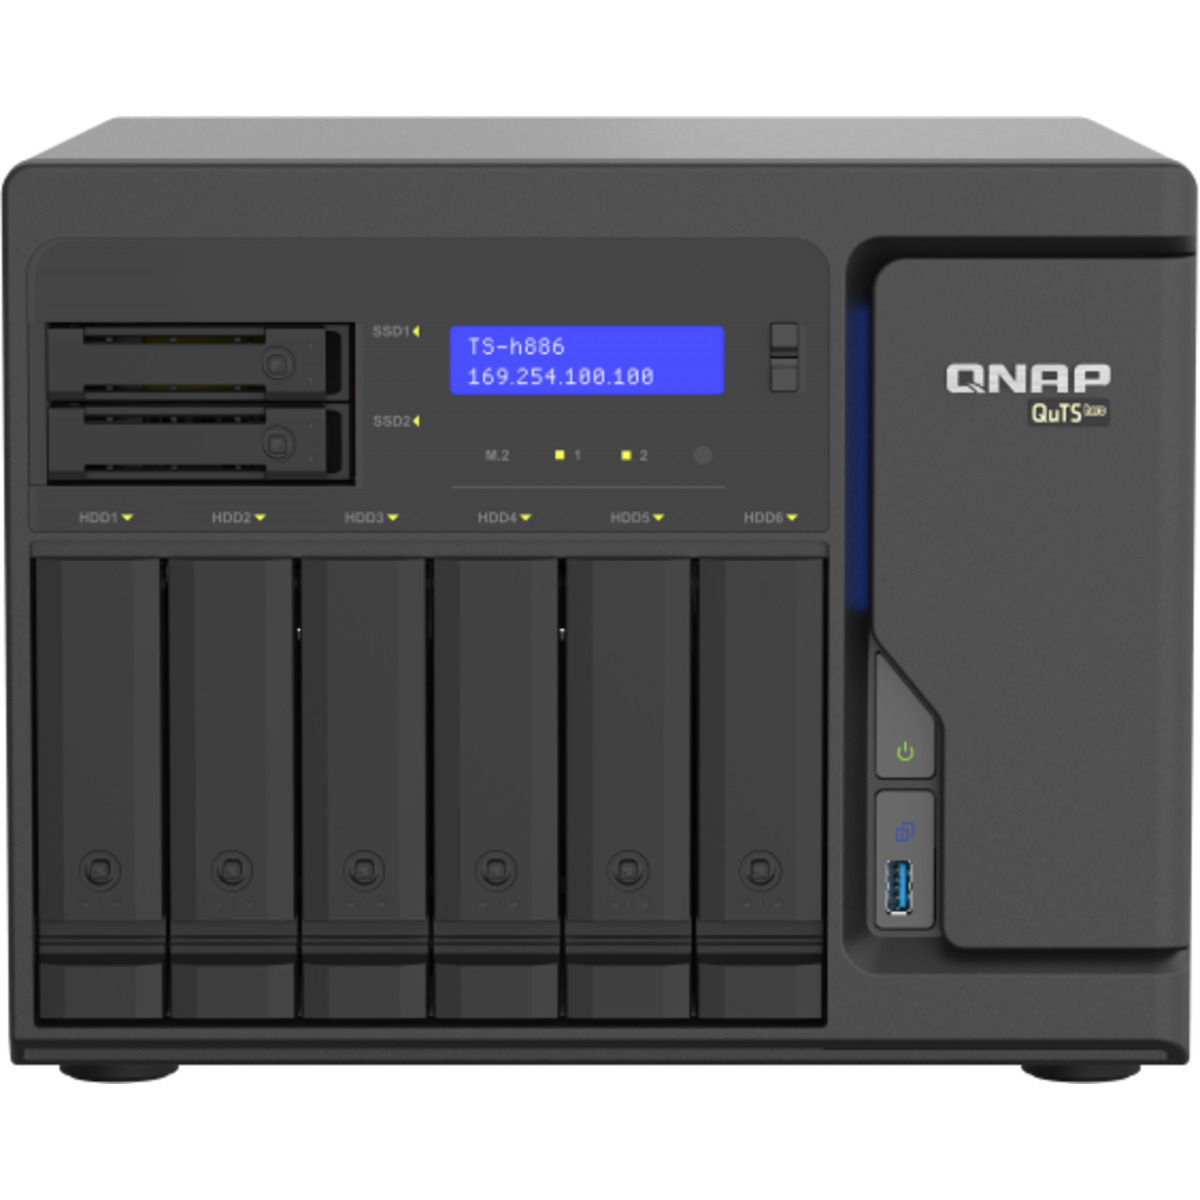 QNAP TS-h886 QuTS hero NAS 60tb 6+2-Bay Desktop Large Business / Enterprise NAS - Network Attached Storage Device 6x10tb Western Digital Gold WD102KRYZ 3.5 7200rpm SATA 6Gb/s HDD ENTERPRISE Class Drives Installed - Burn-In Tested TS-h886 QuTS hero NAS